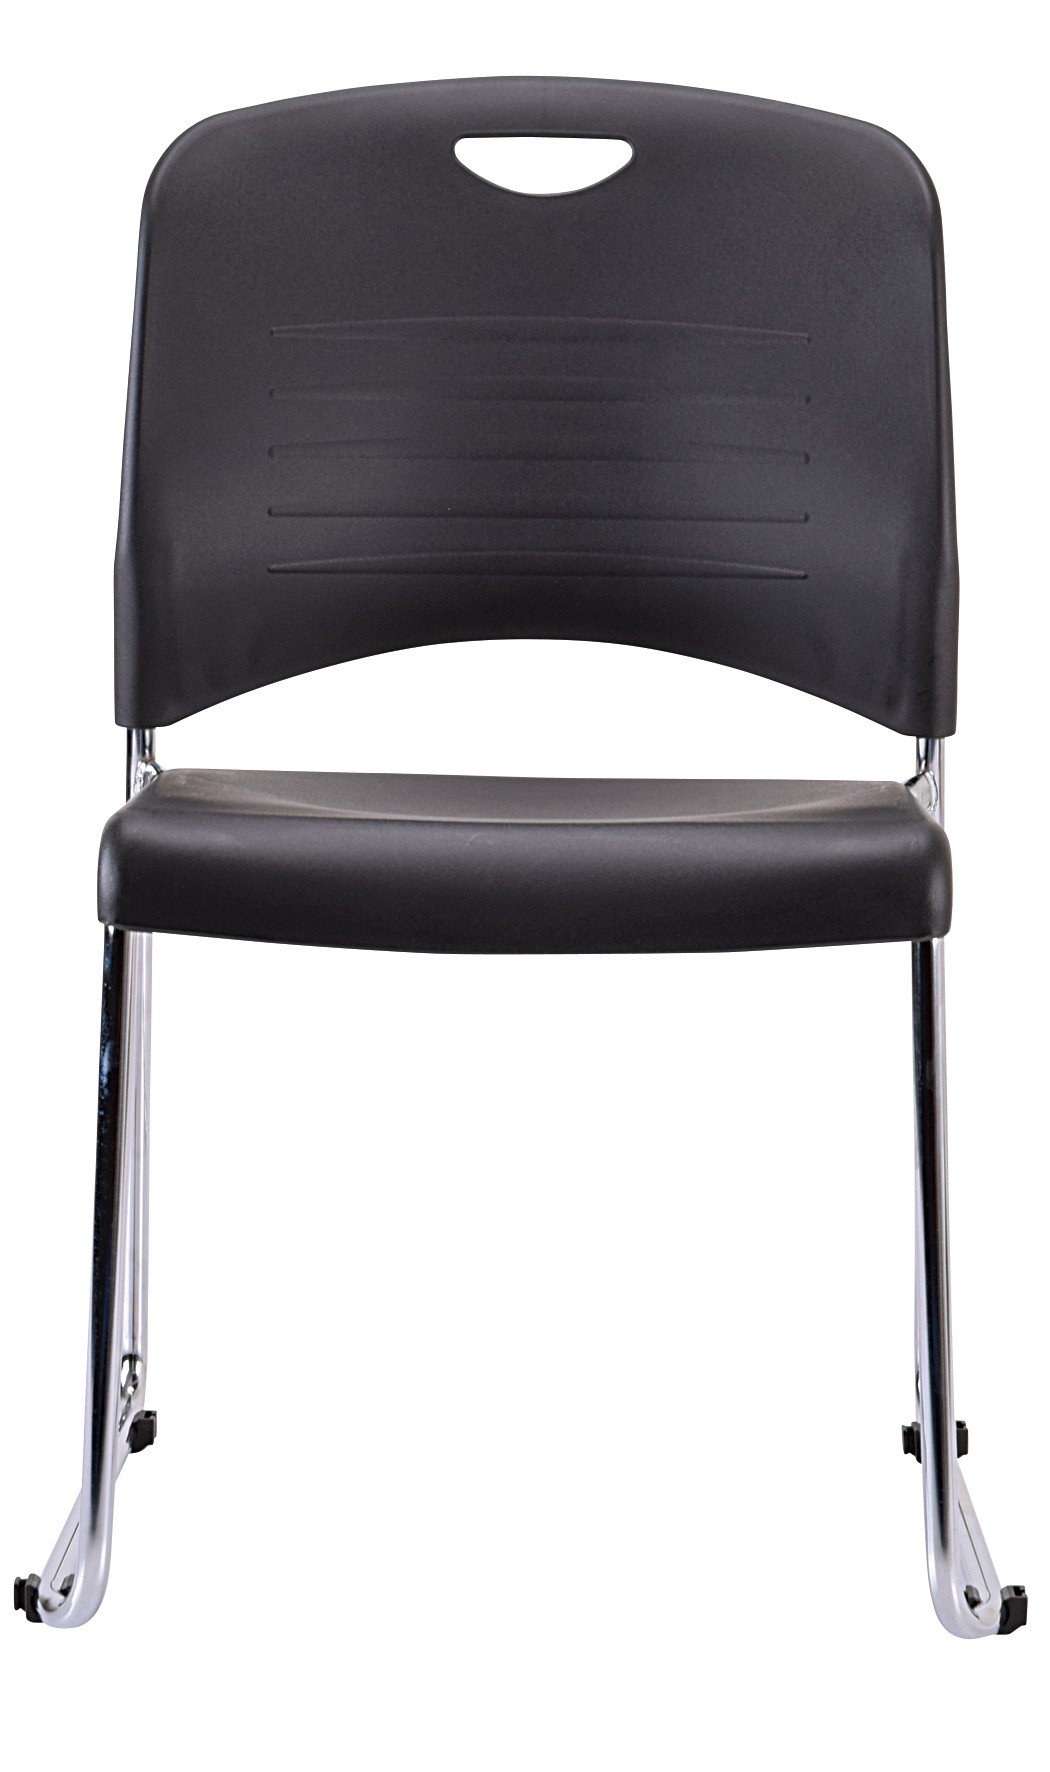 18" x 22.5" x 33.5" Black Plastic Guest Chair